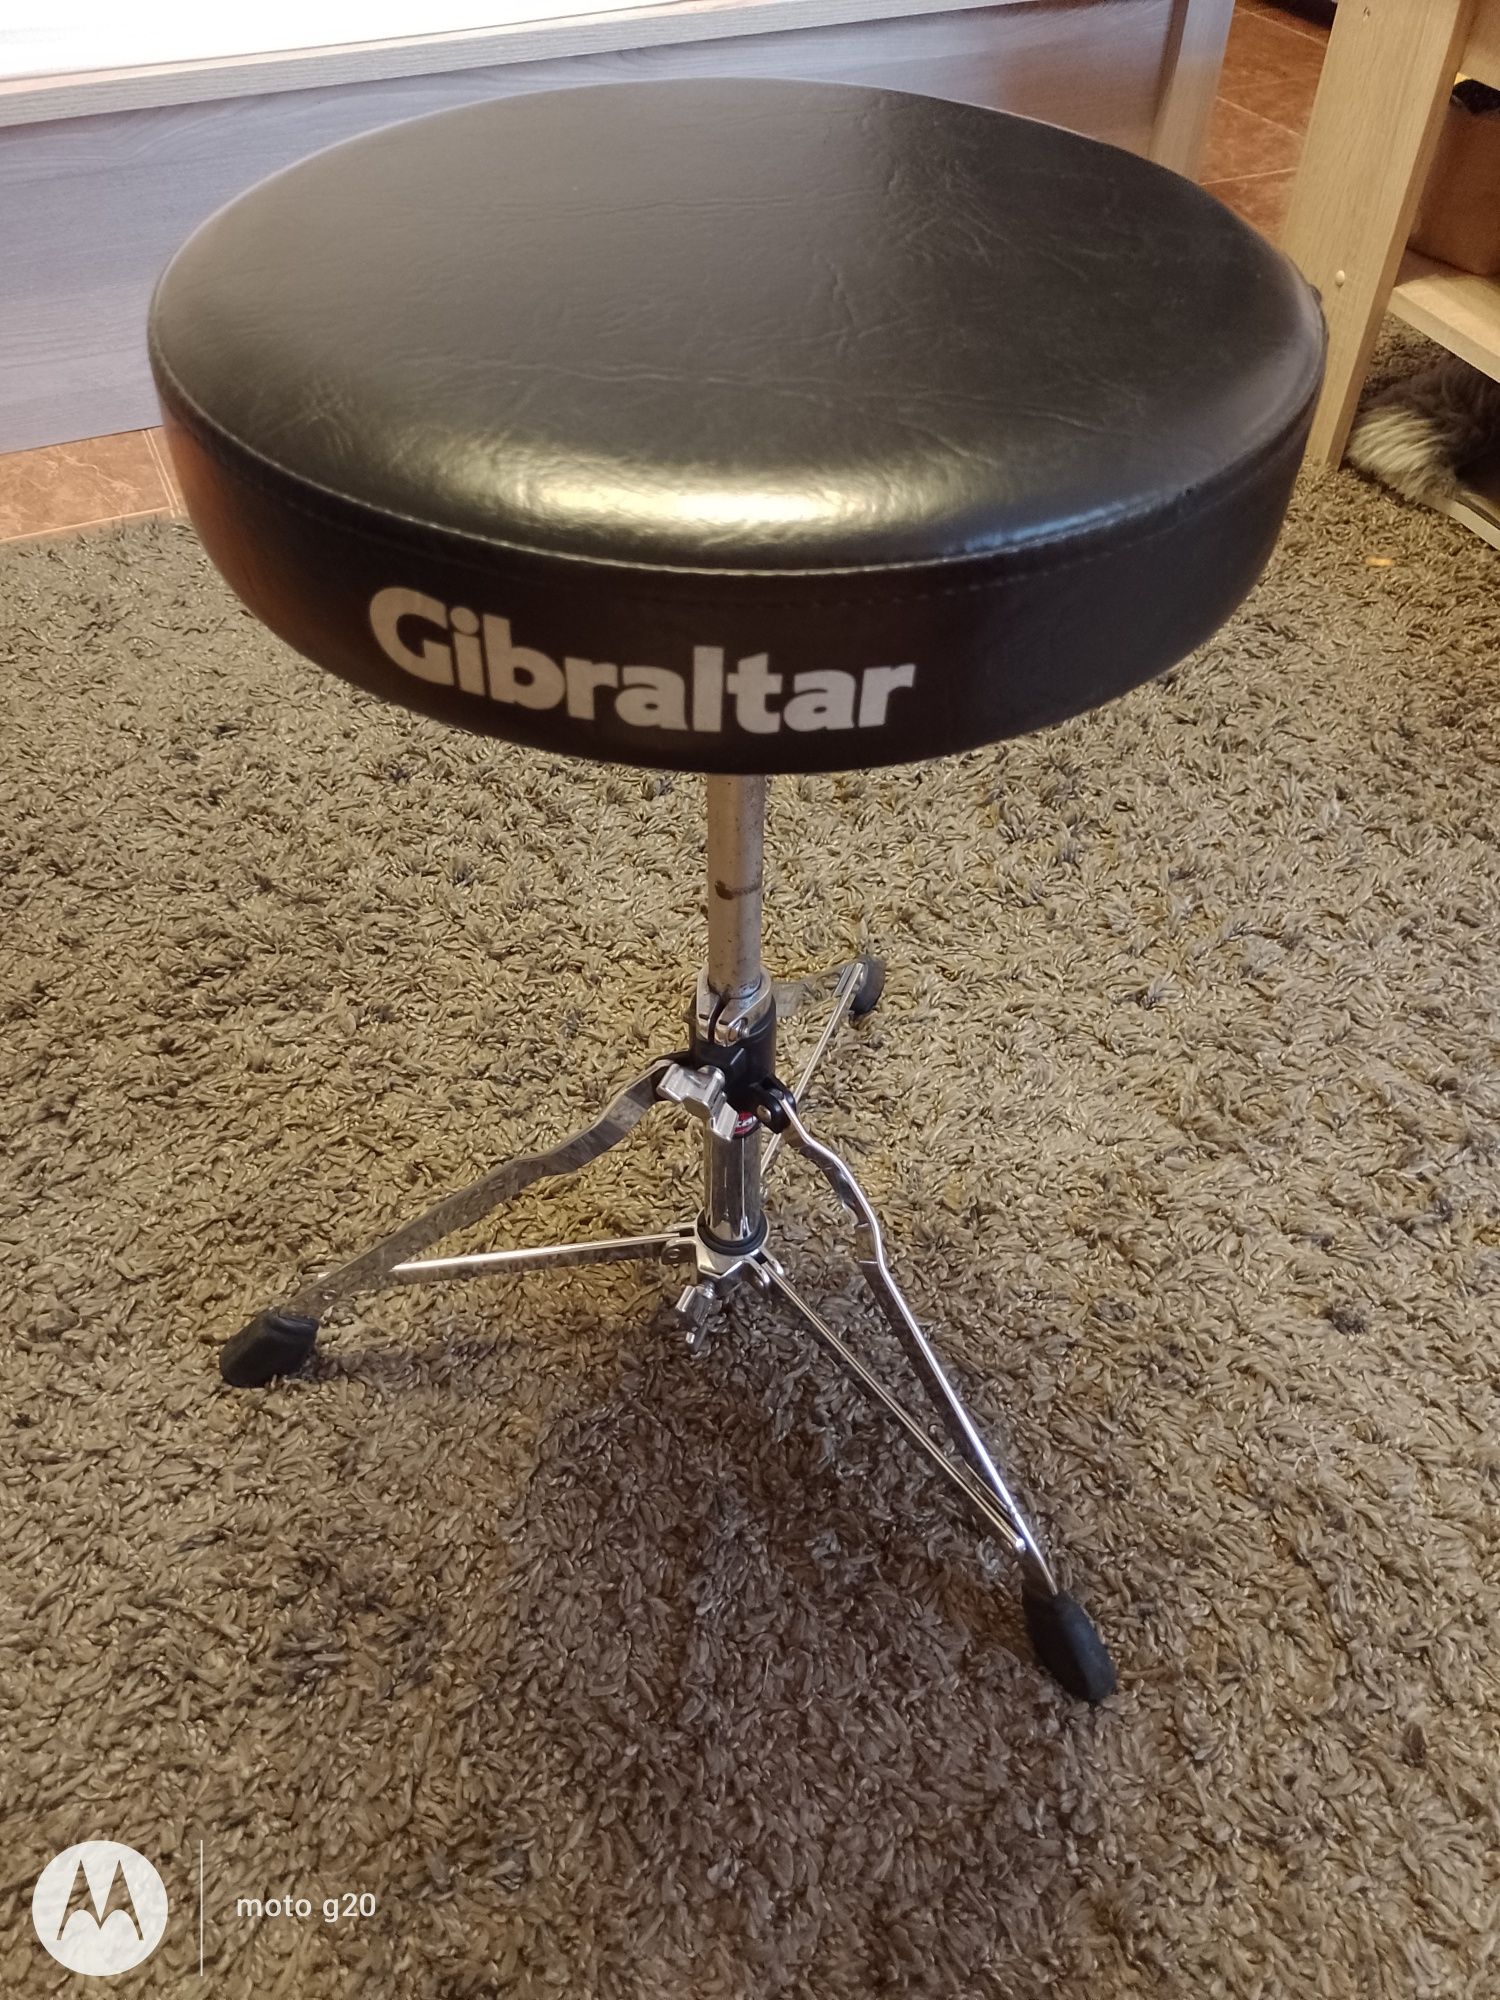 Stołek Gibraltar, perkusyjny stołek, taboret